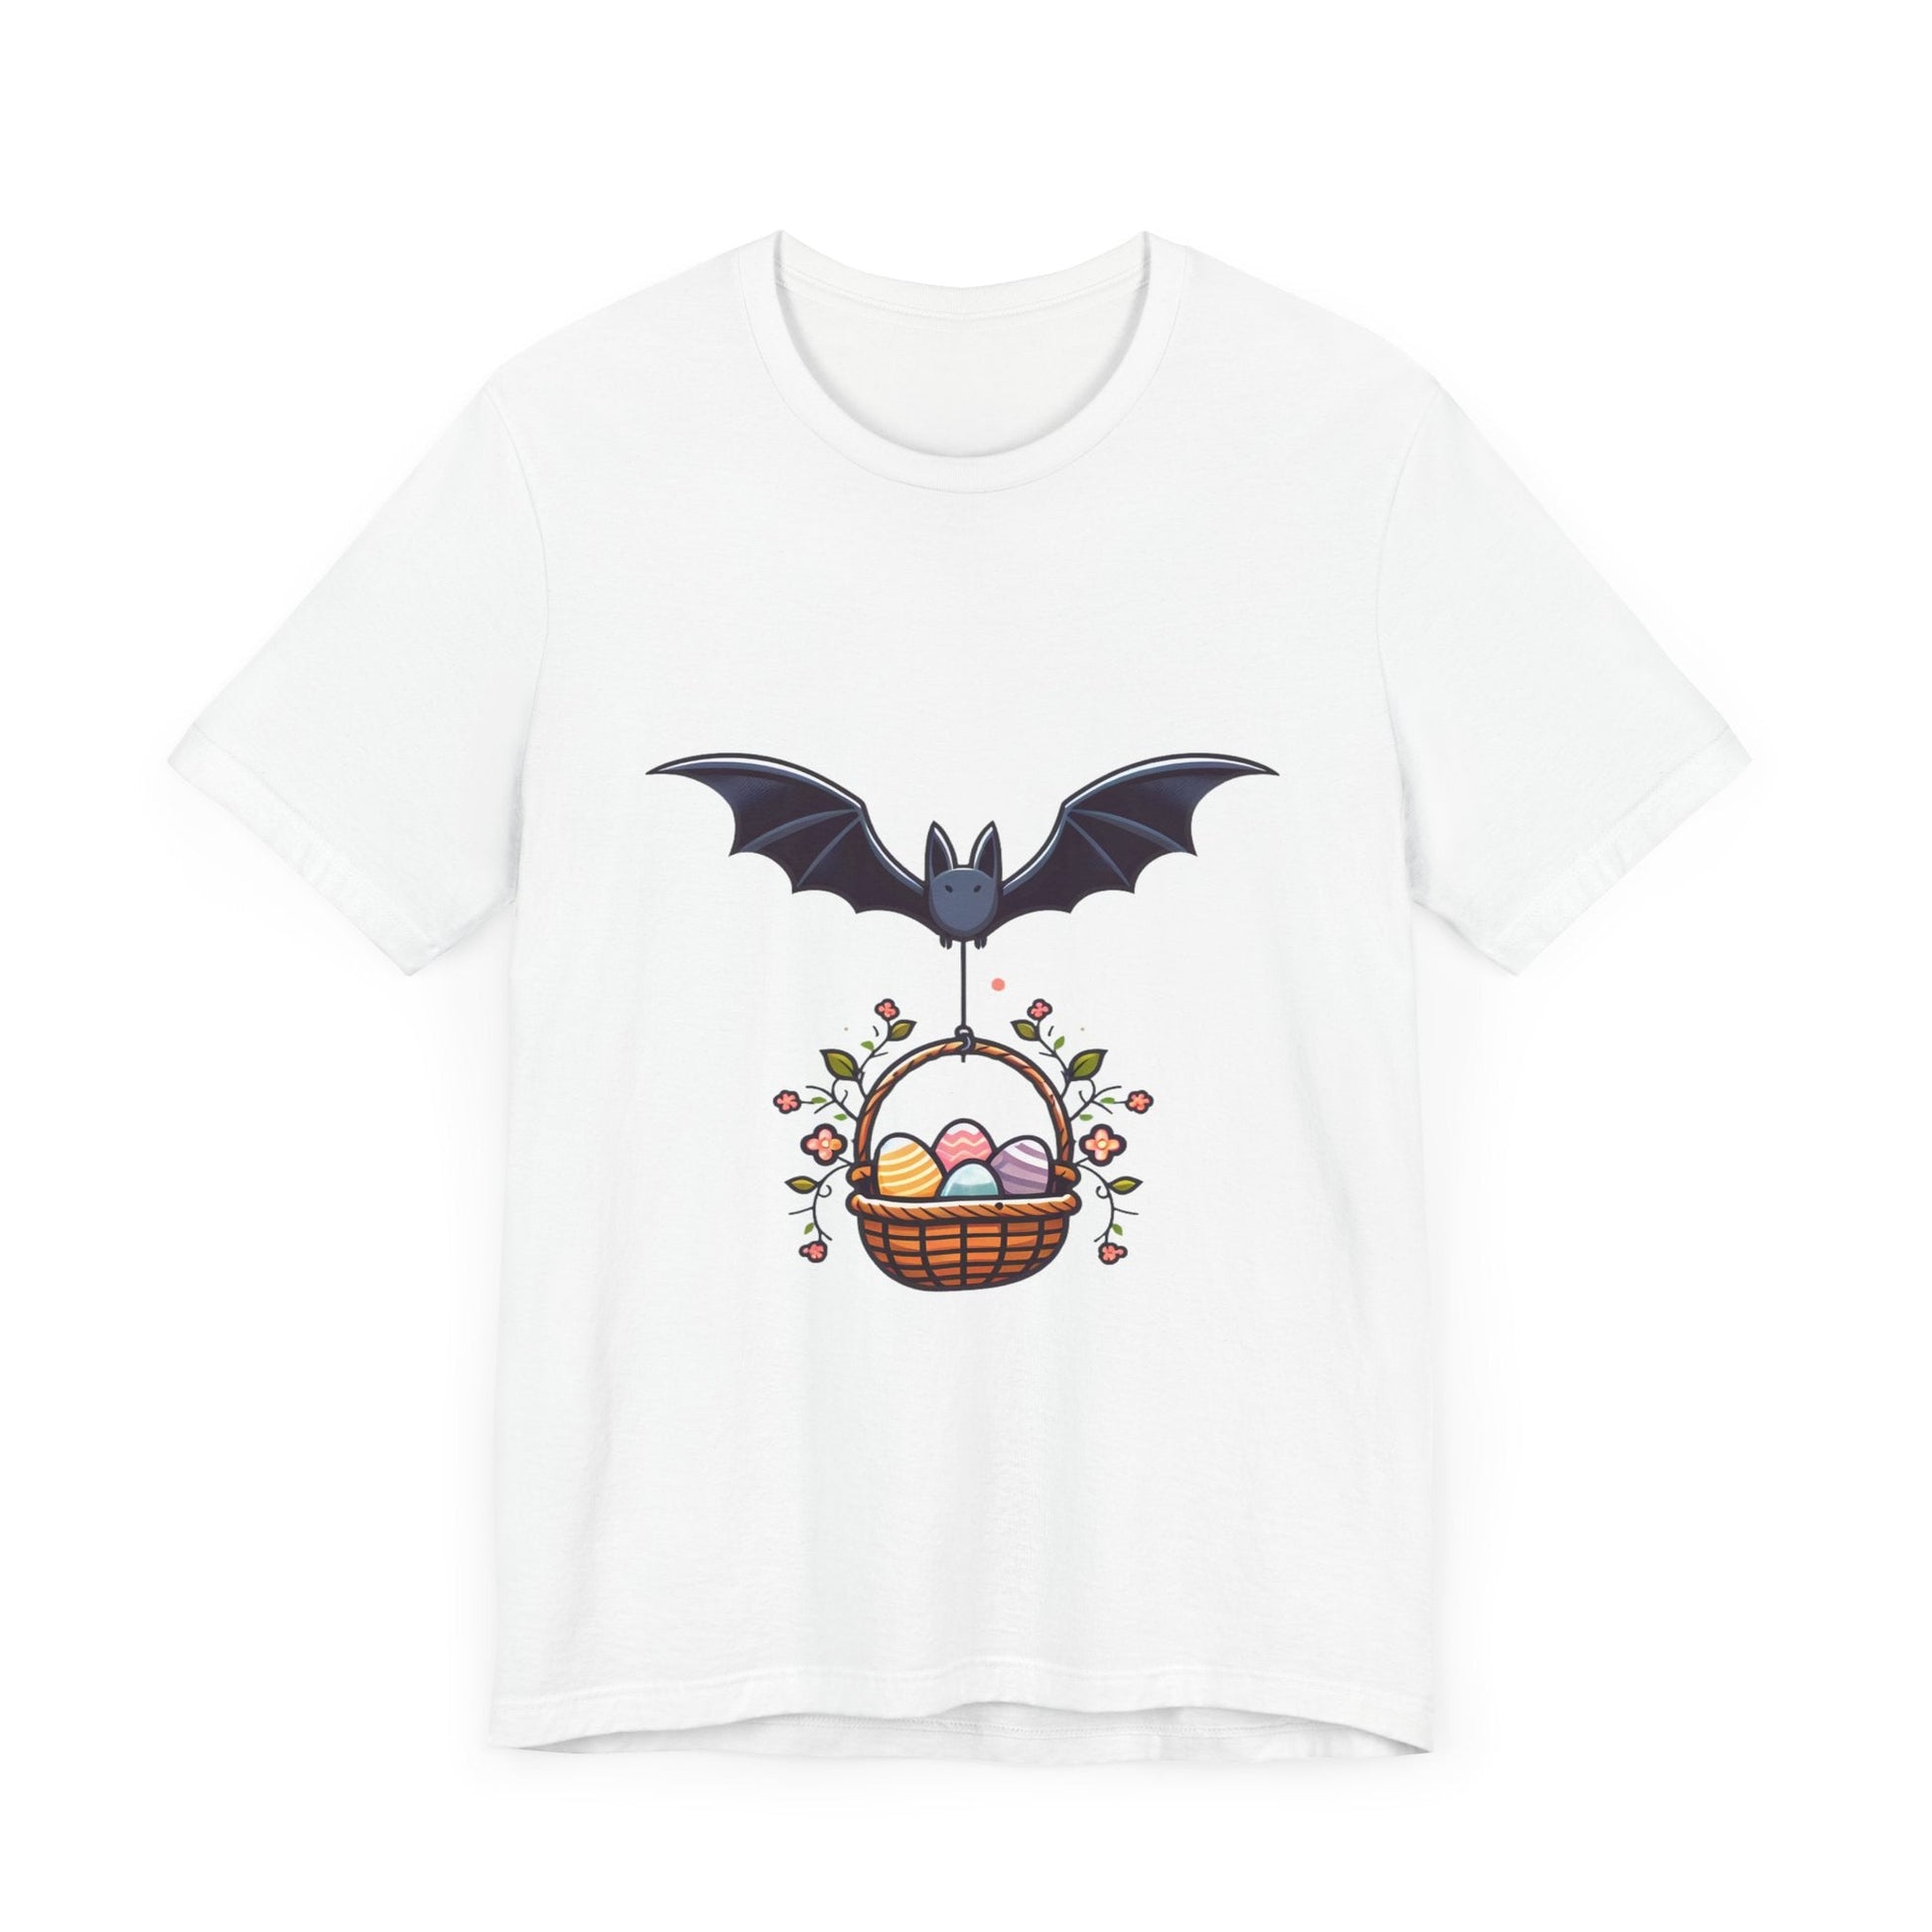 Bat With Easter Basket Short Sleeve Tee ShirtT - ShirtVTZdesignsWhiteXSbatsCottonCrew neck